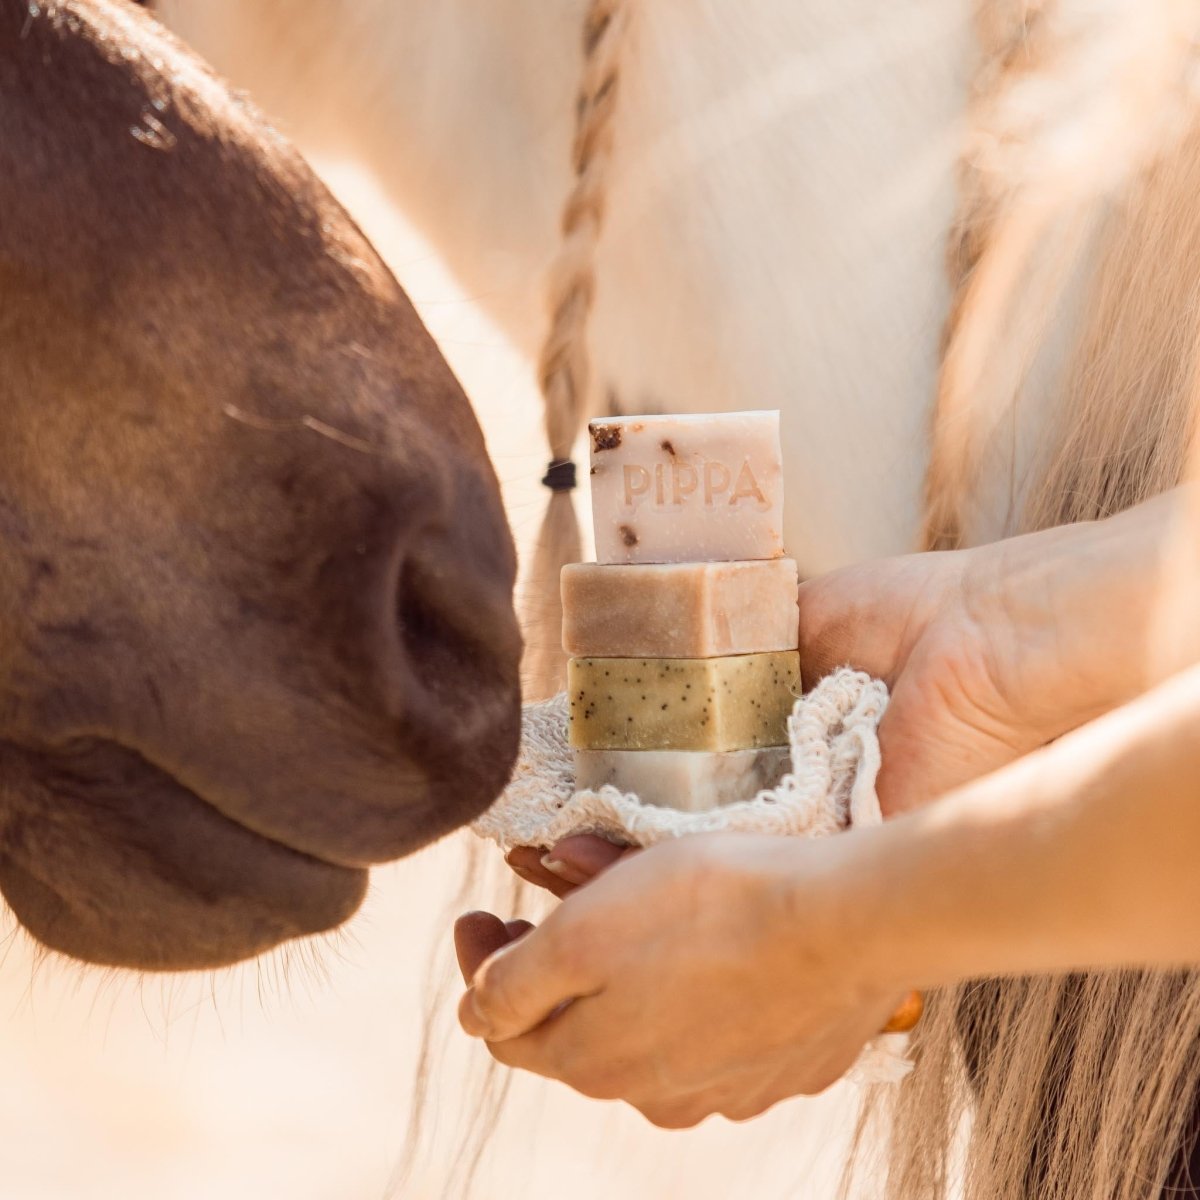 PIPPA Paardenshampoo Proefpakket - 'Standard' Collection - PIPPA Equestrian Soap - Shampoo en crèmespoeling voor huisdieren